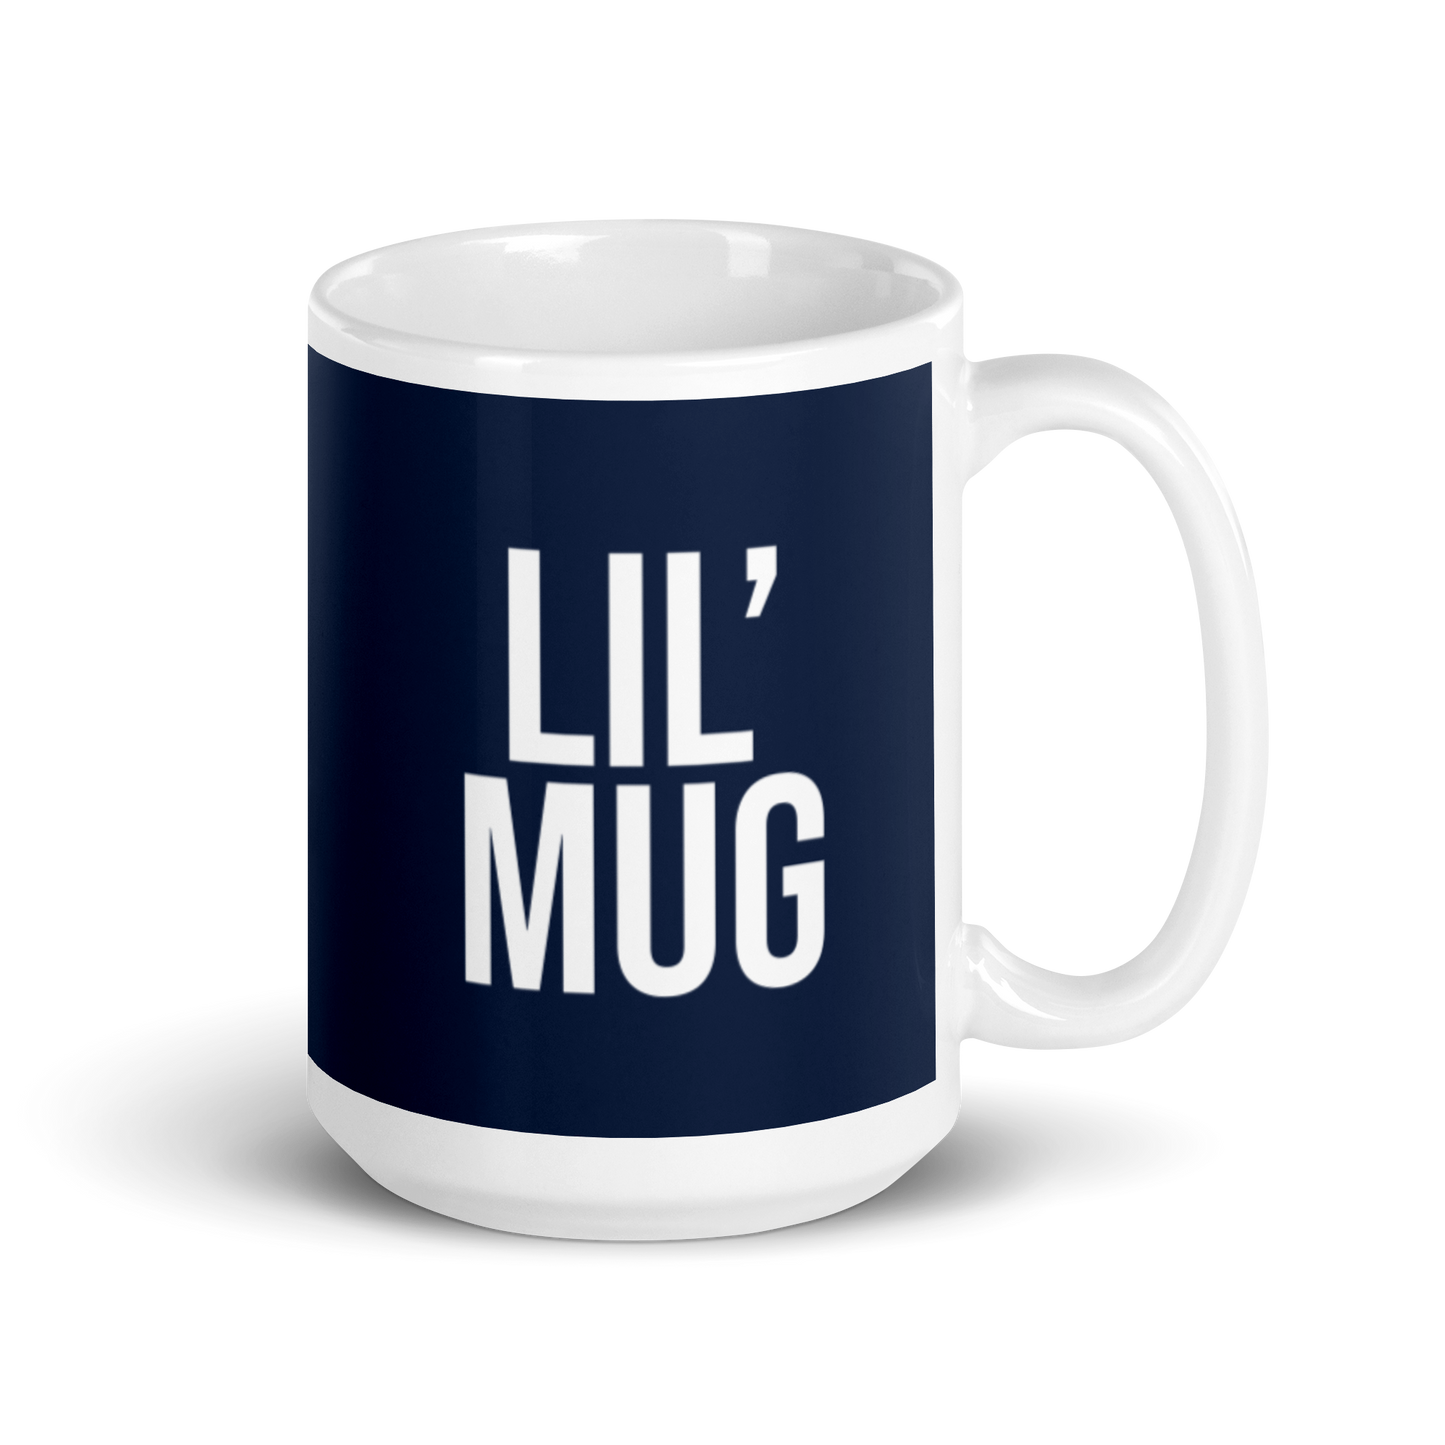 The 200K Lil' Mug (15oz)